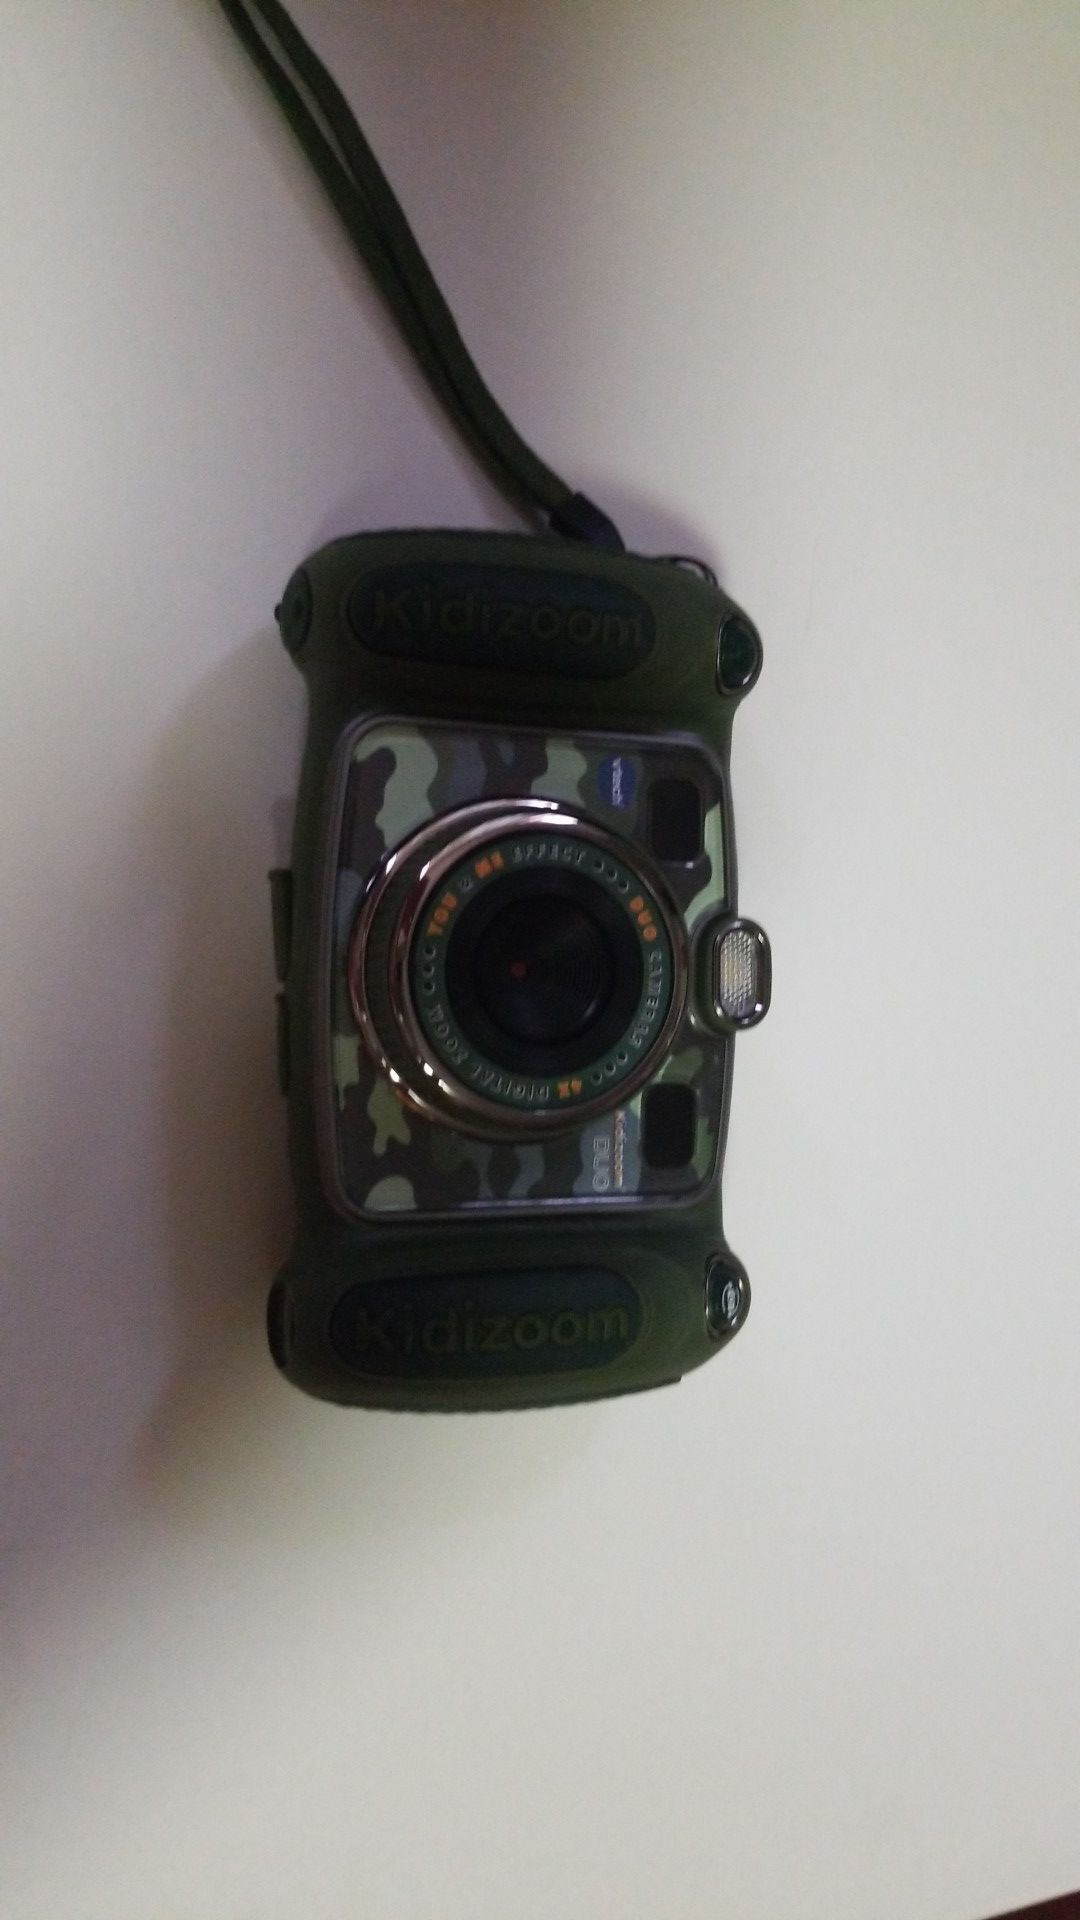 Vtech kidizoom camera